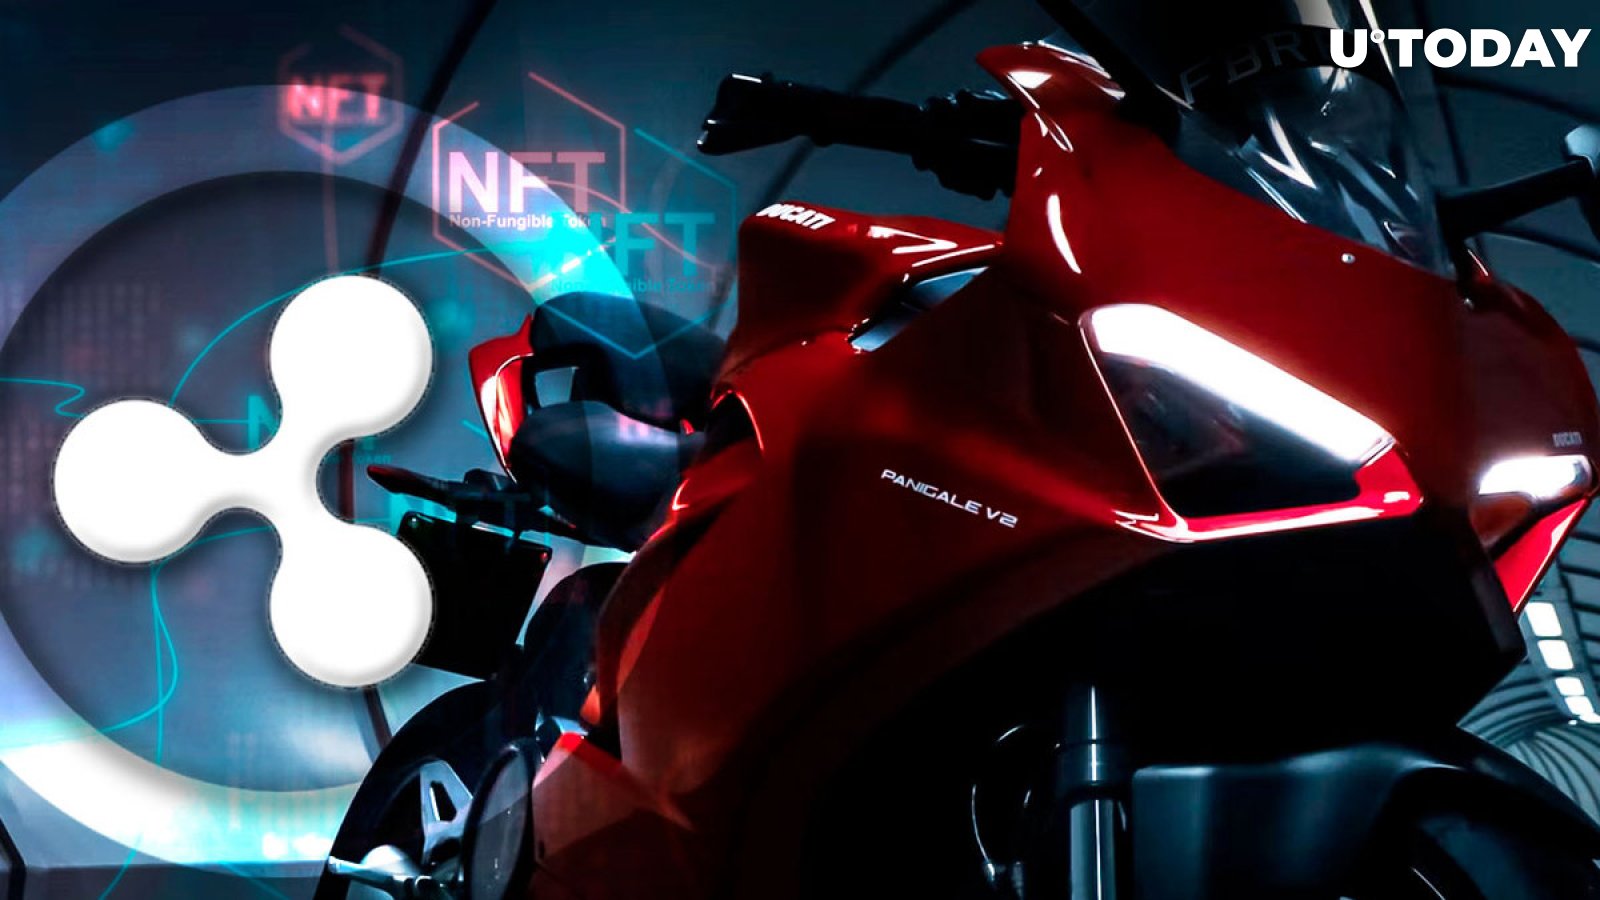 Ducati Chooses Ripple as Blockchain Partner to Launch NFT